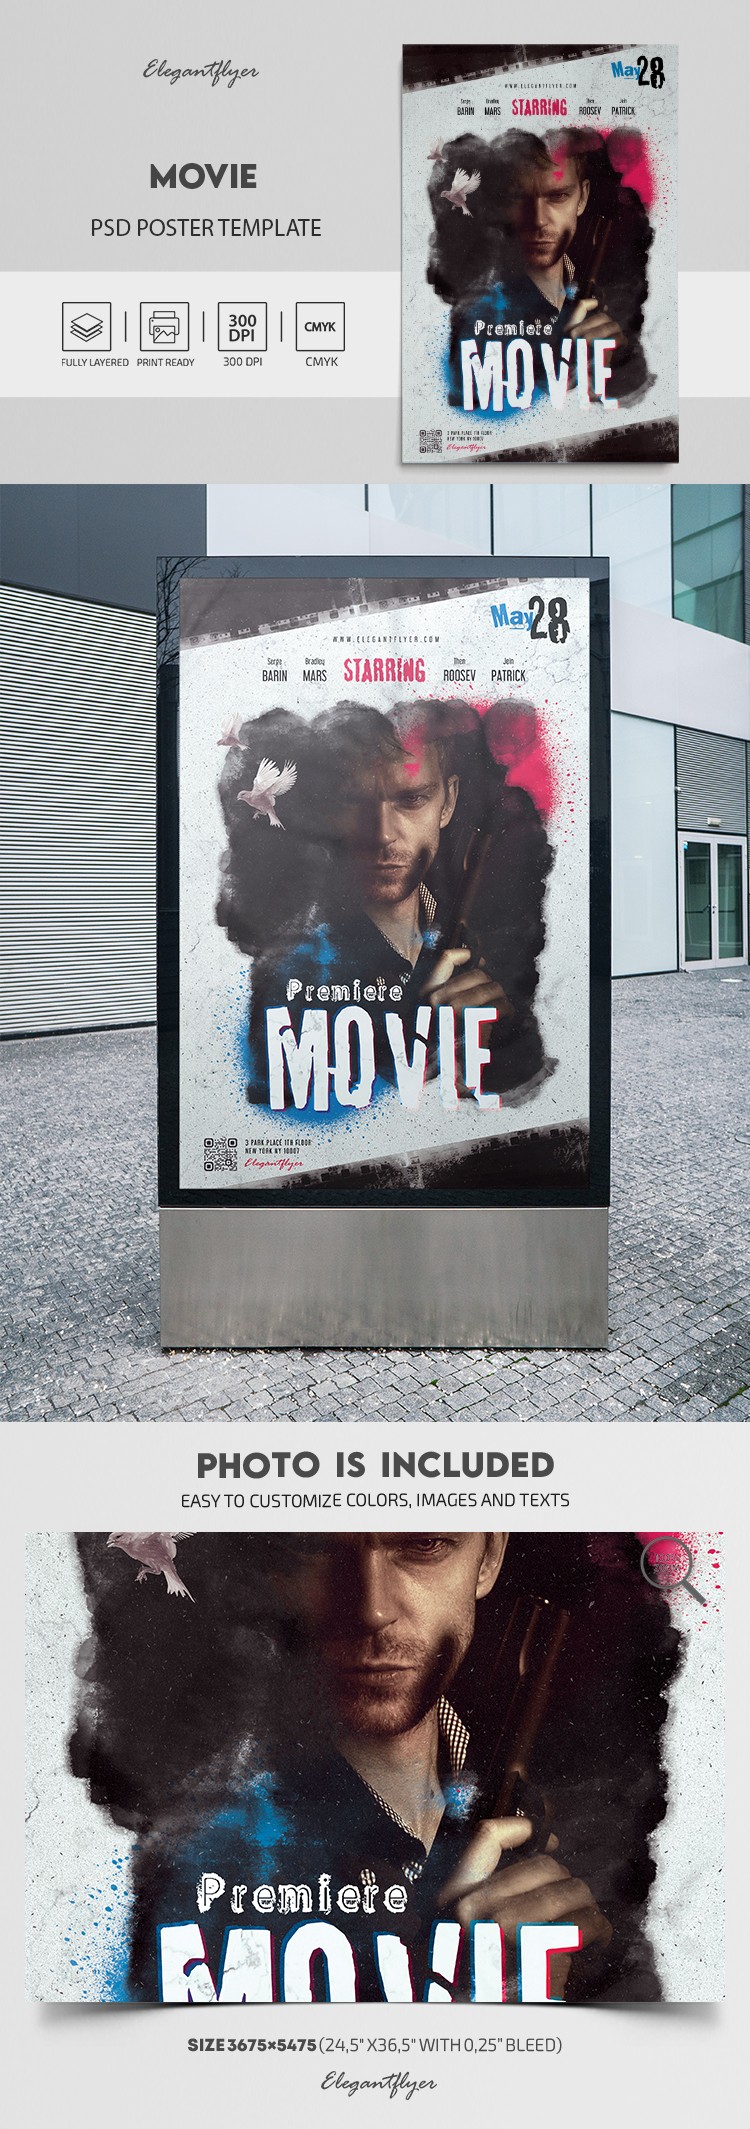 Movie - Free PSD Poster Template by ElegantFlyer